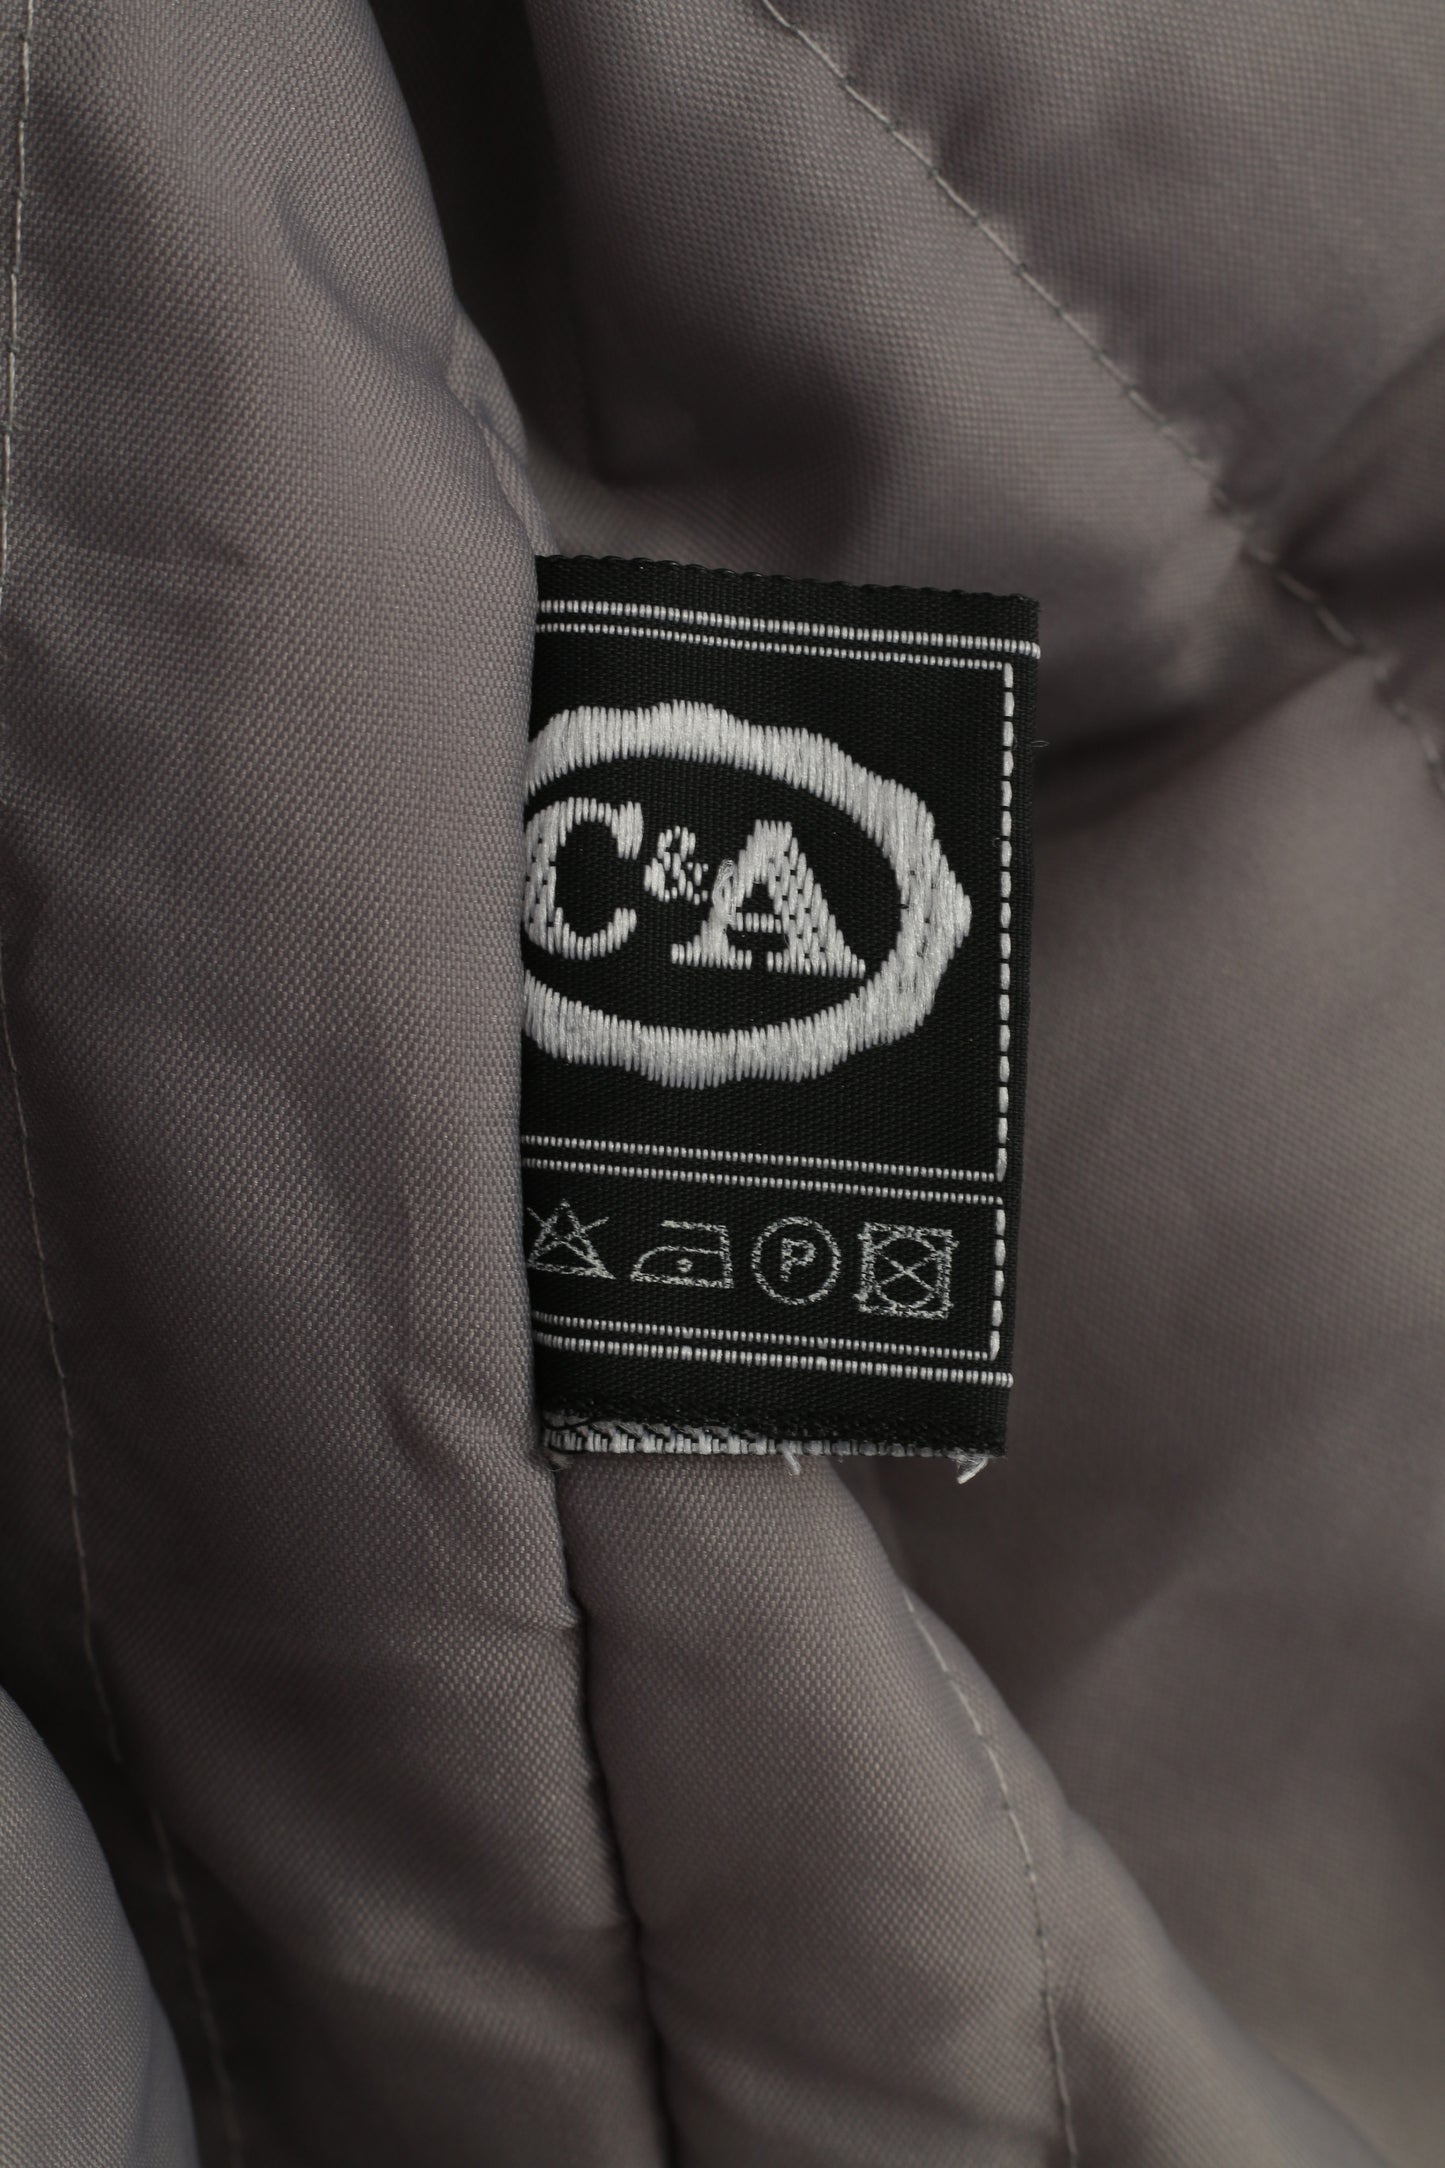 C&A Women 50 3XL Jacket Full Zipper Abstract Grey Shoulder Pads Vintage Top